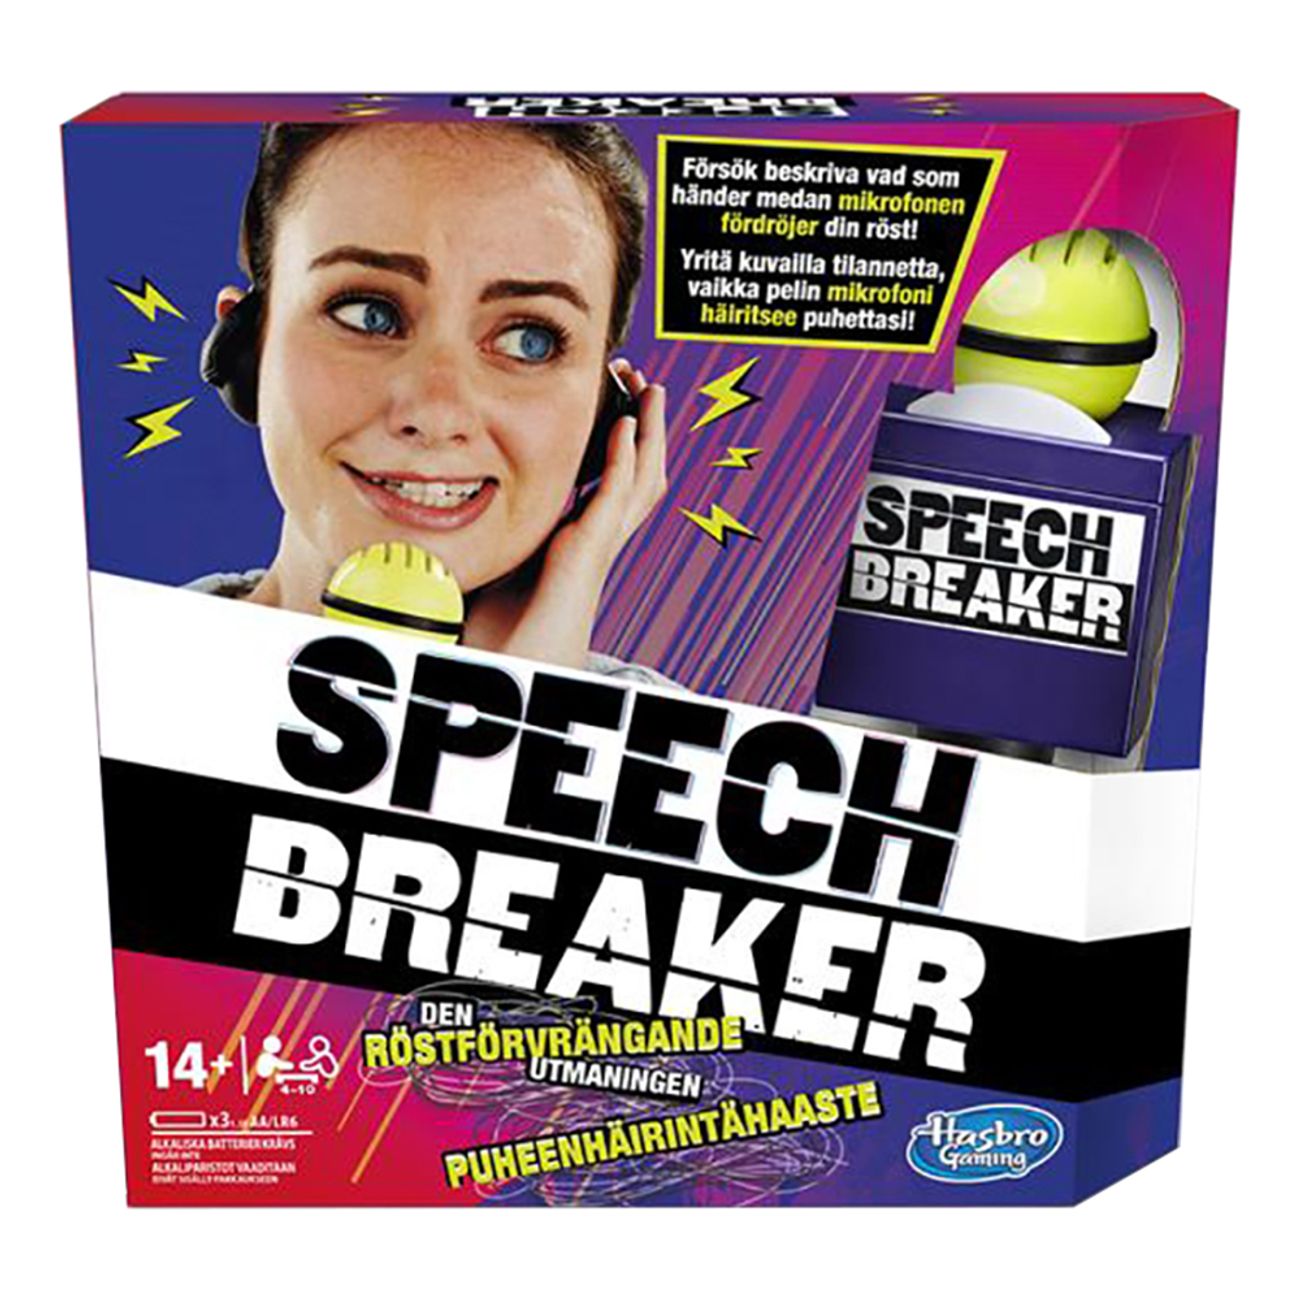 speechbreaker-sallskapsspel-1